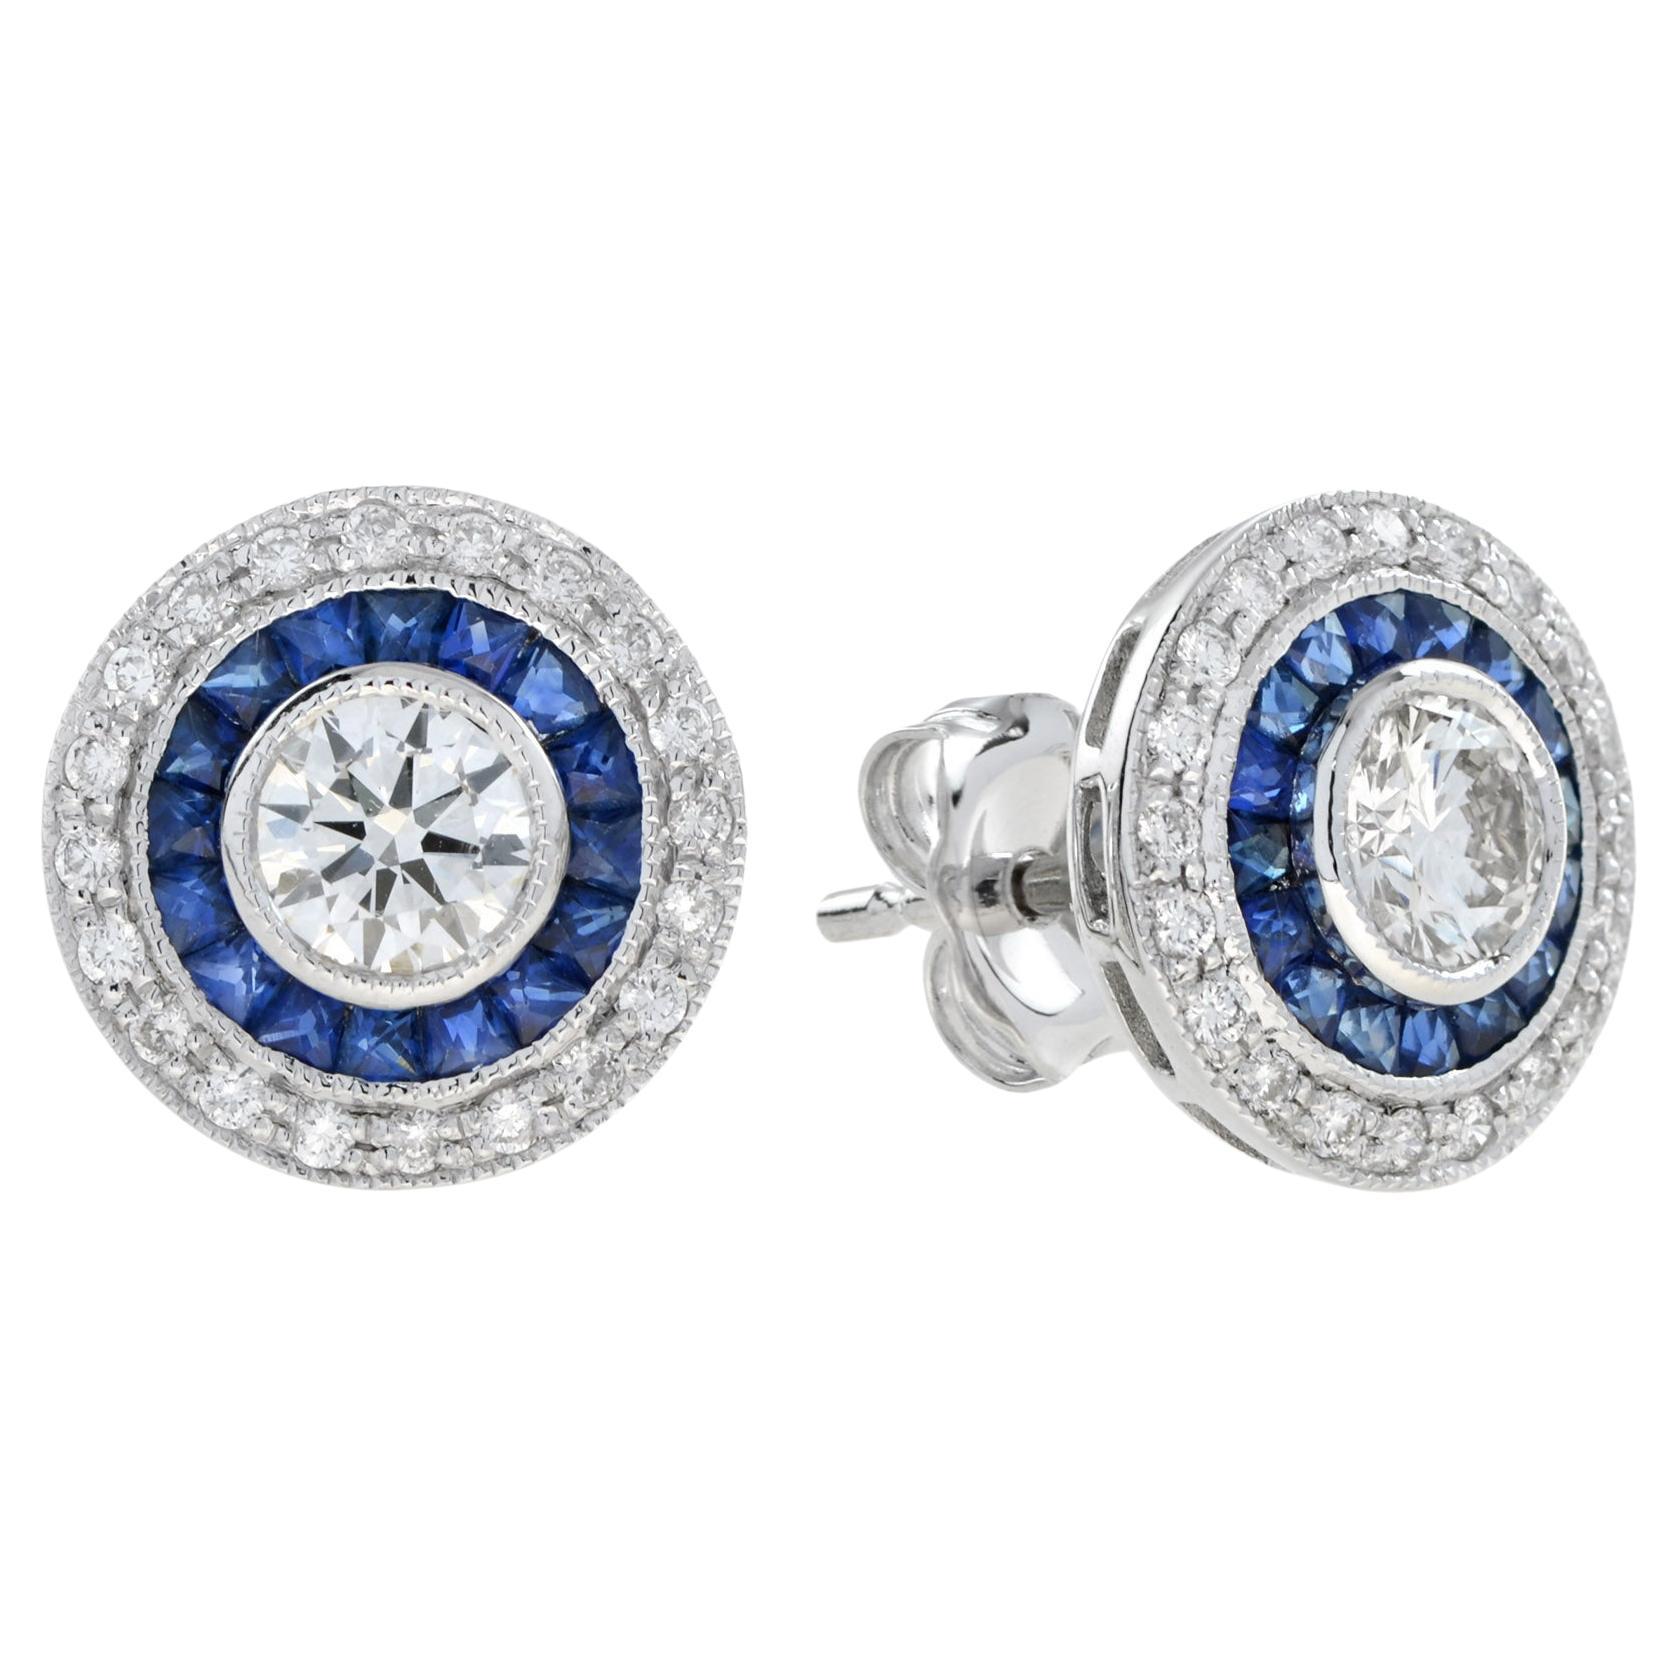 Art Deco Style 4.4 Round Diamond Blue Sapphire Stud Earrings in 18K White Gold